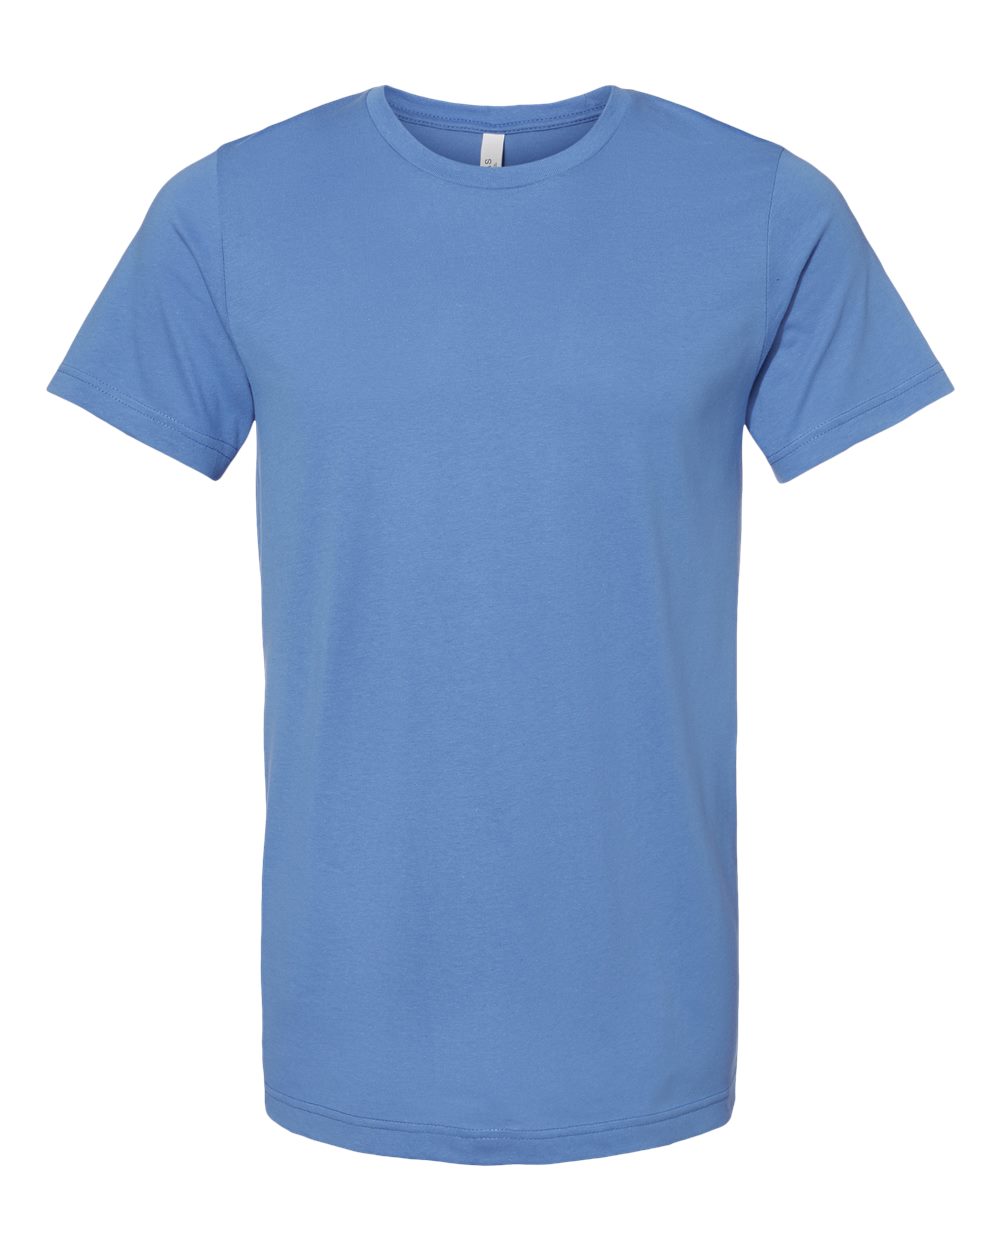 Bella + Canvas 3001 - Unisex Short Sleeve Jersey Tee $4.61 - T-Shirts